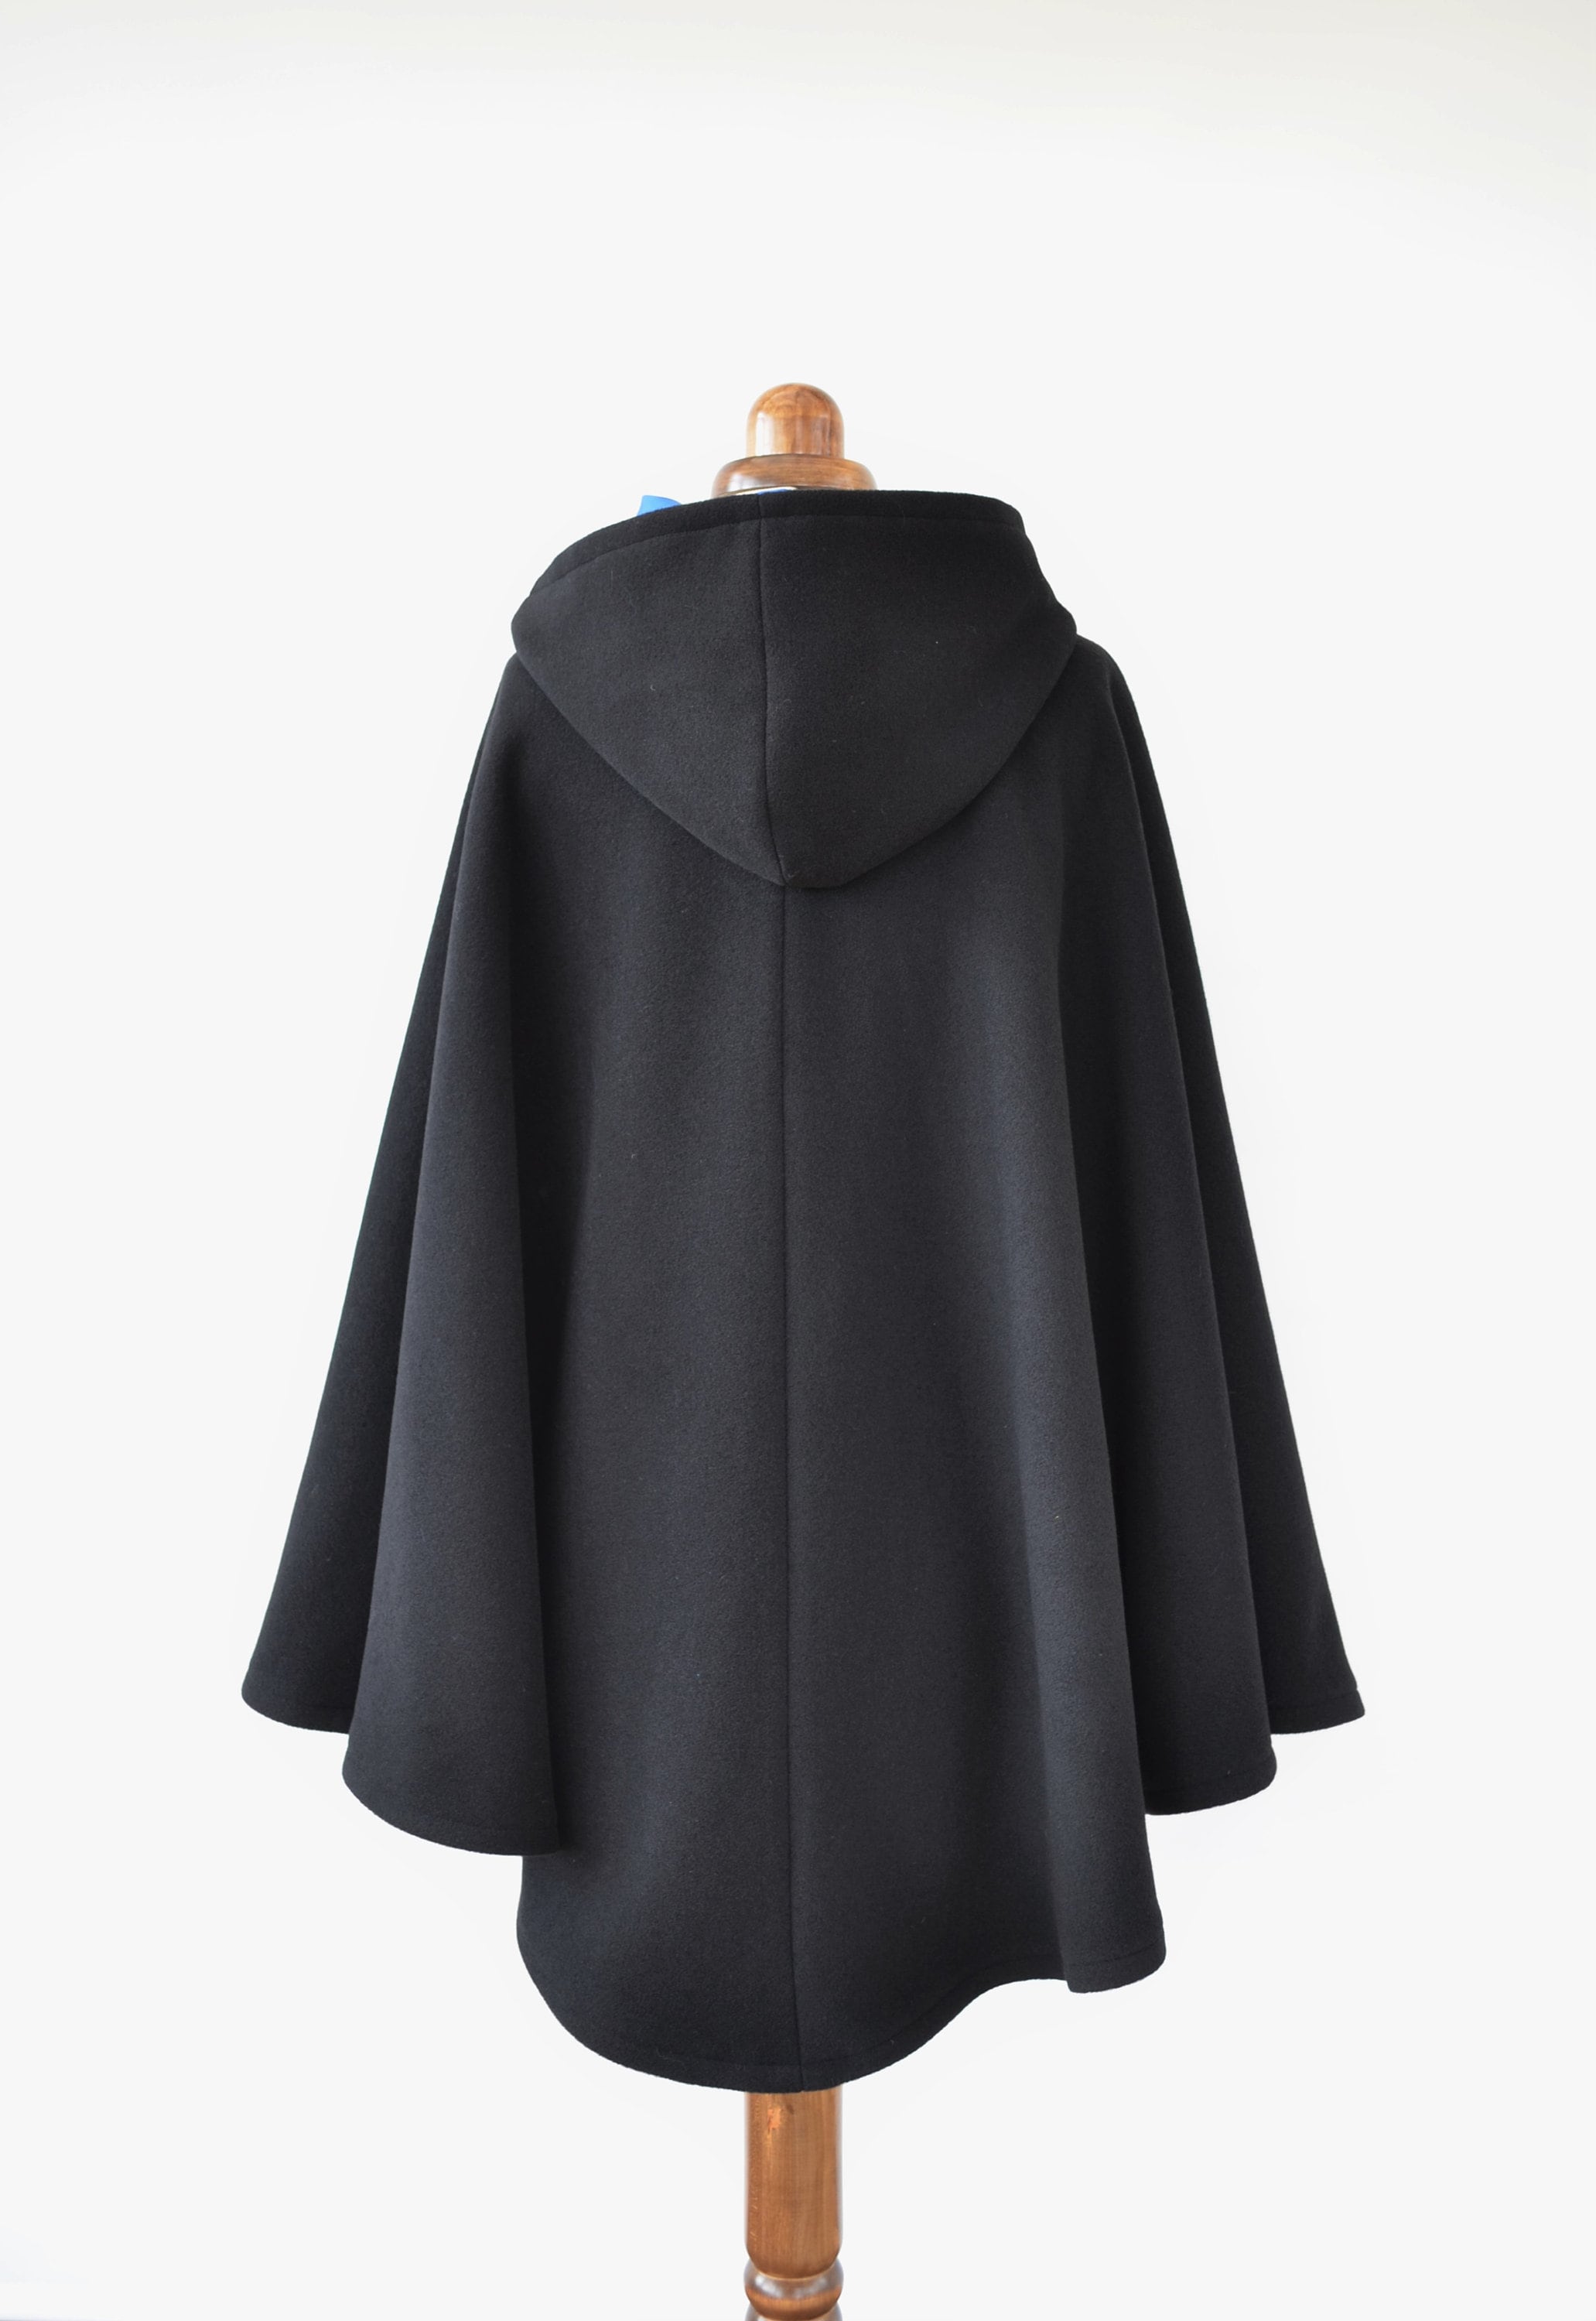 Black Wool Hooded Cloak Lined Hooded Cape Coat Medieval | Etsy